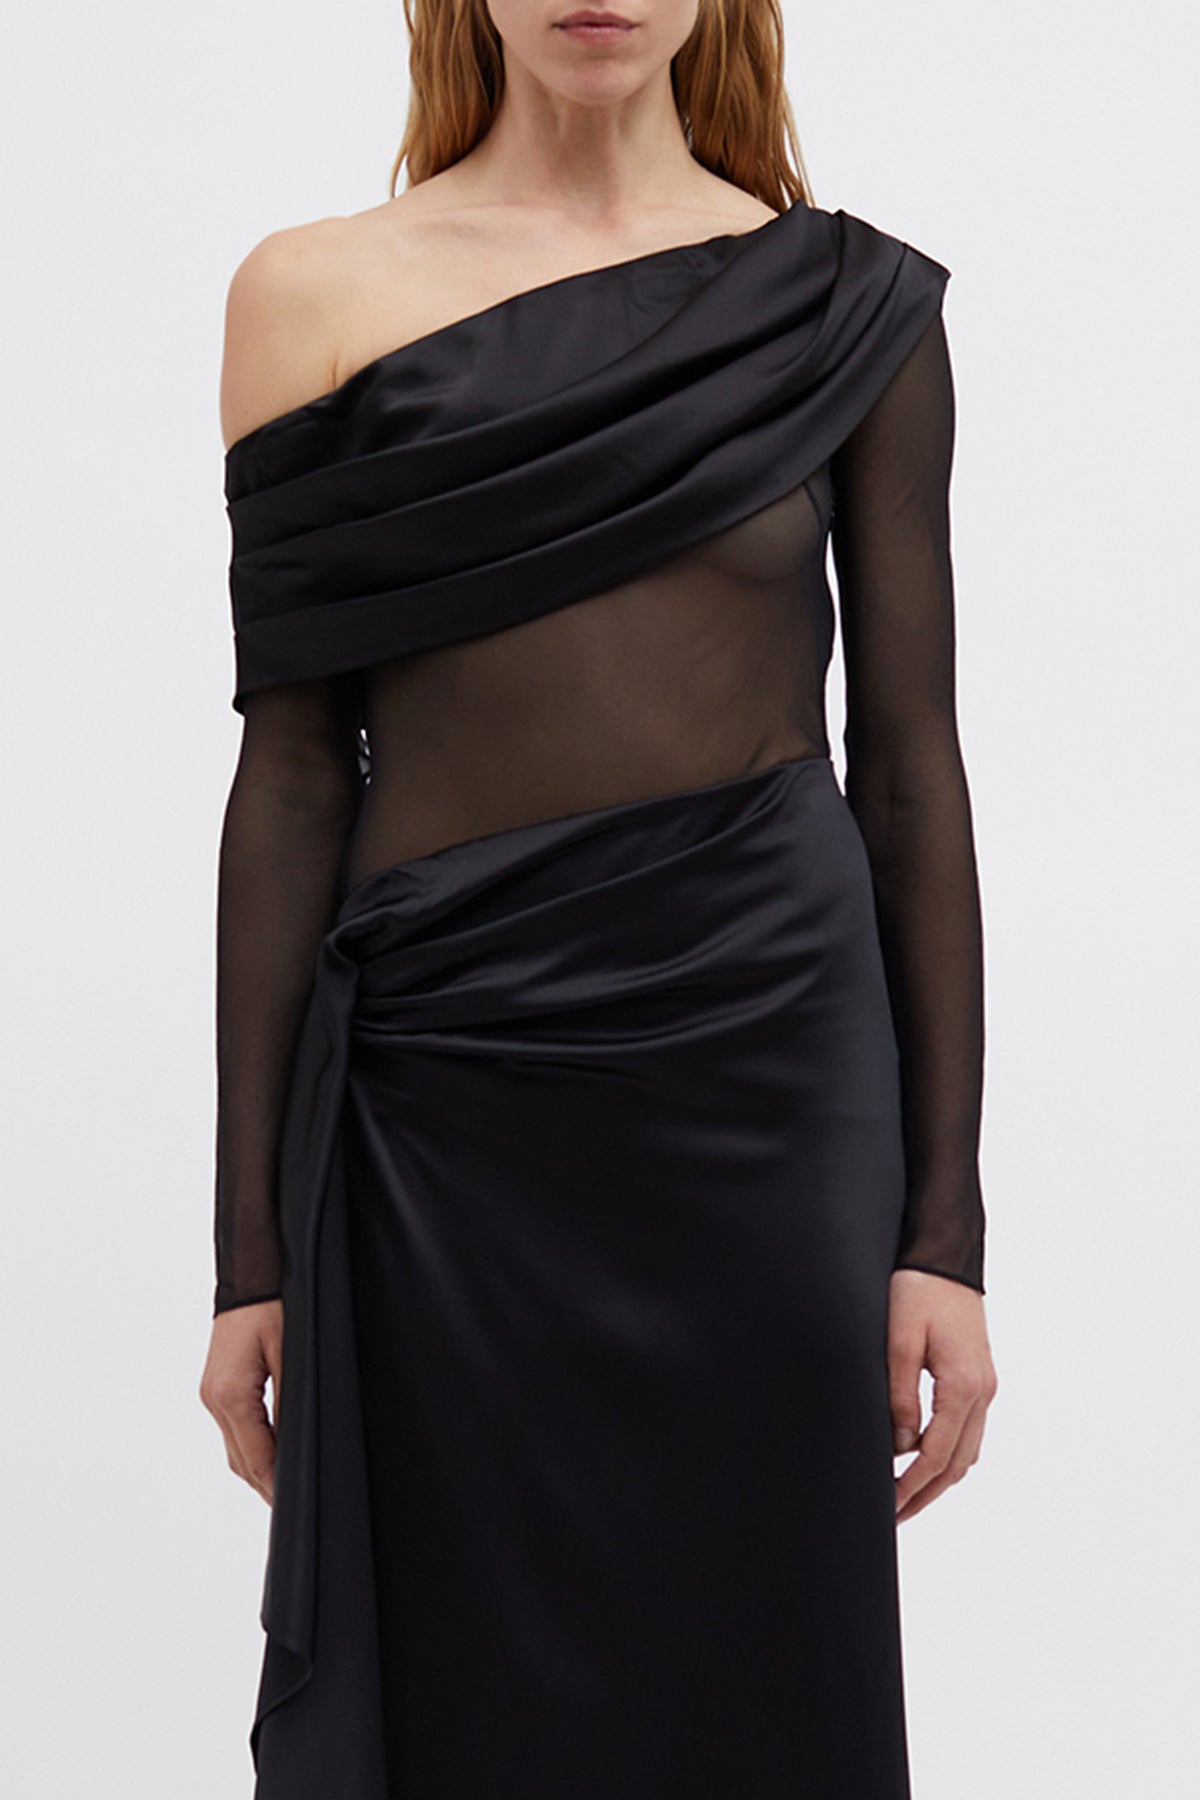 Vilenica Veil Long-Sleeve Top in Black - shop-olivia.com